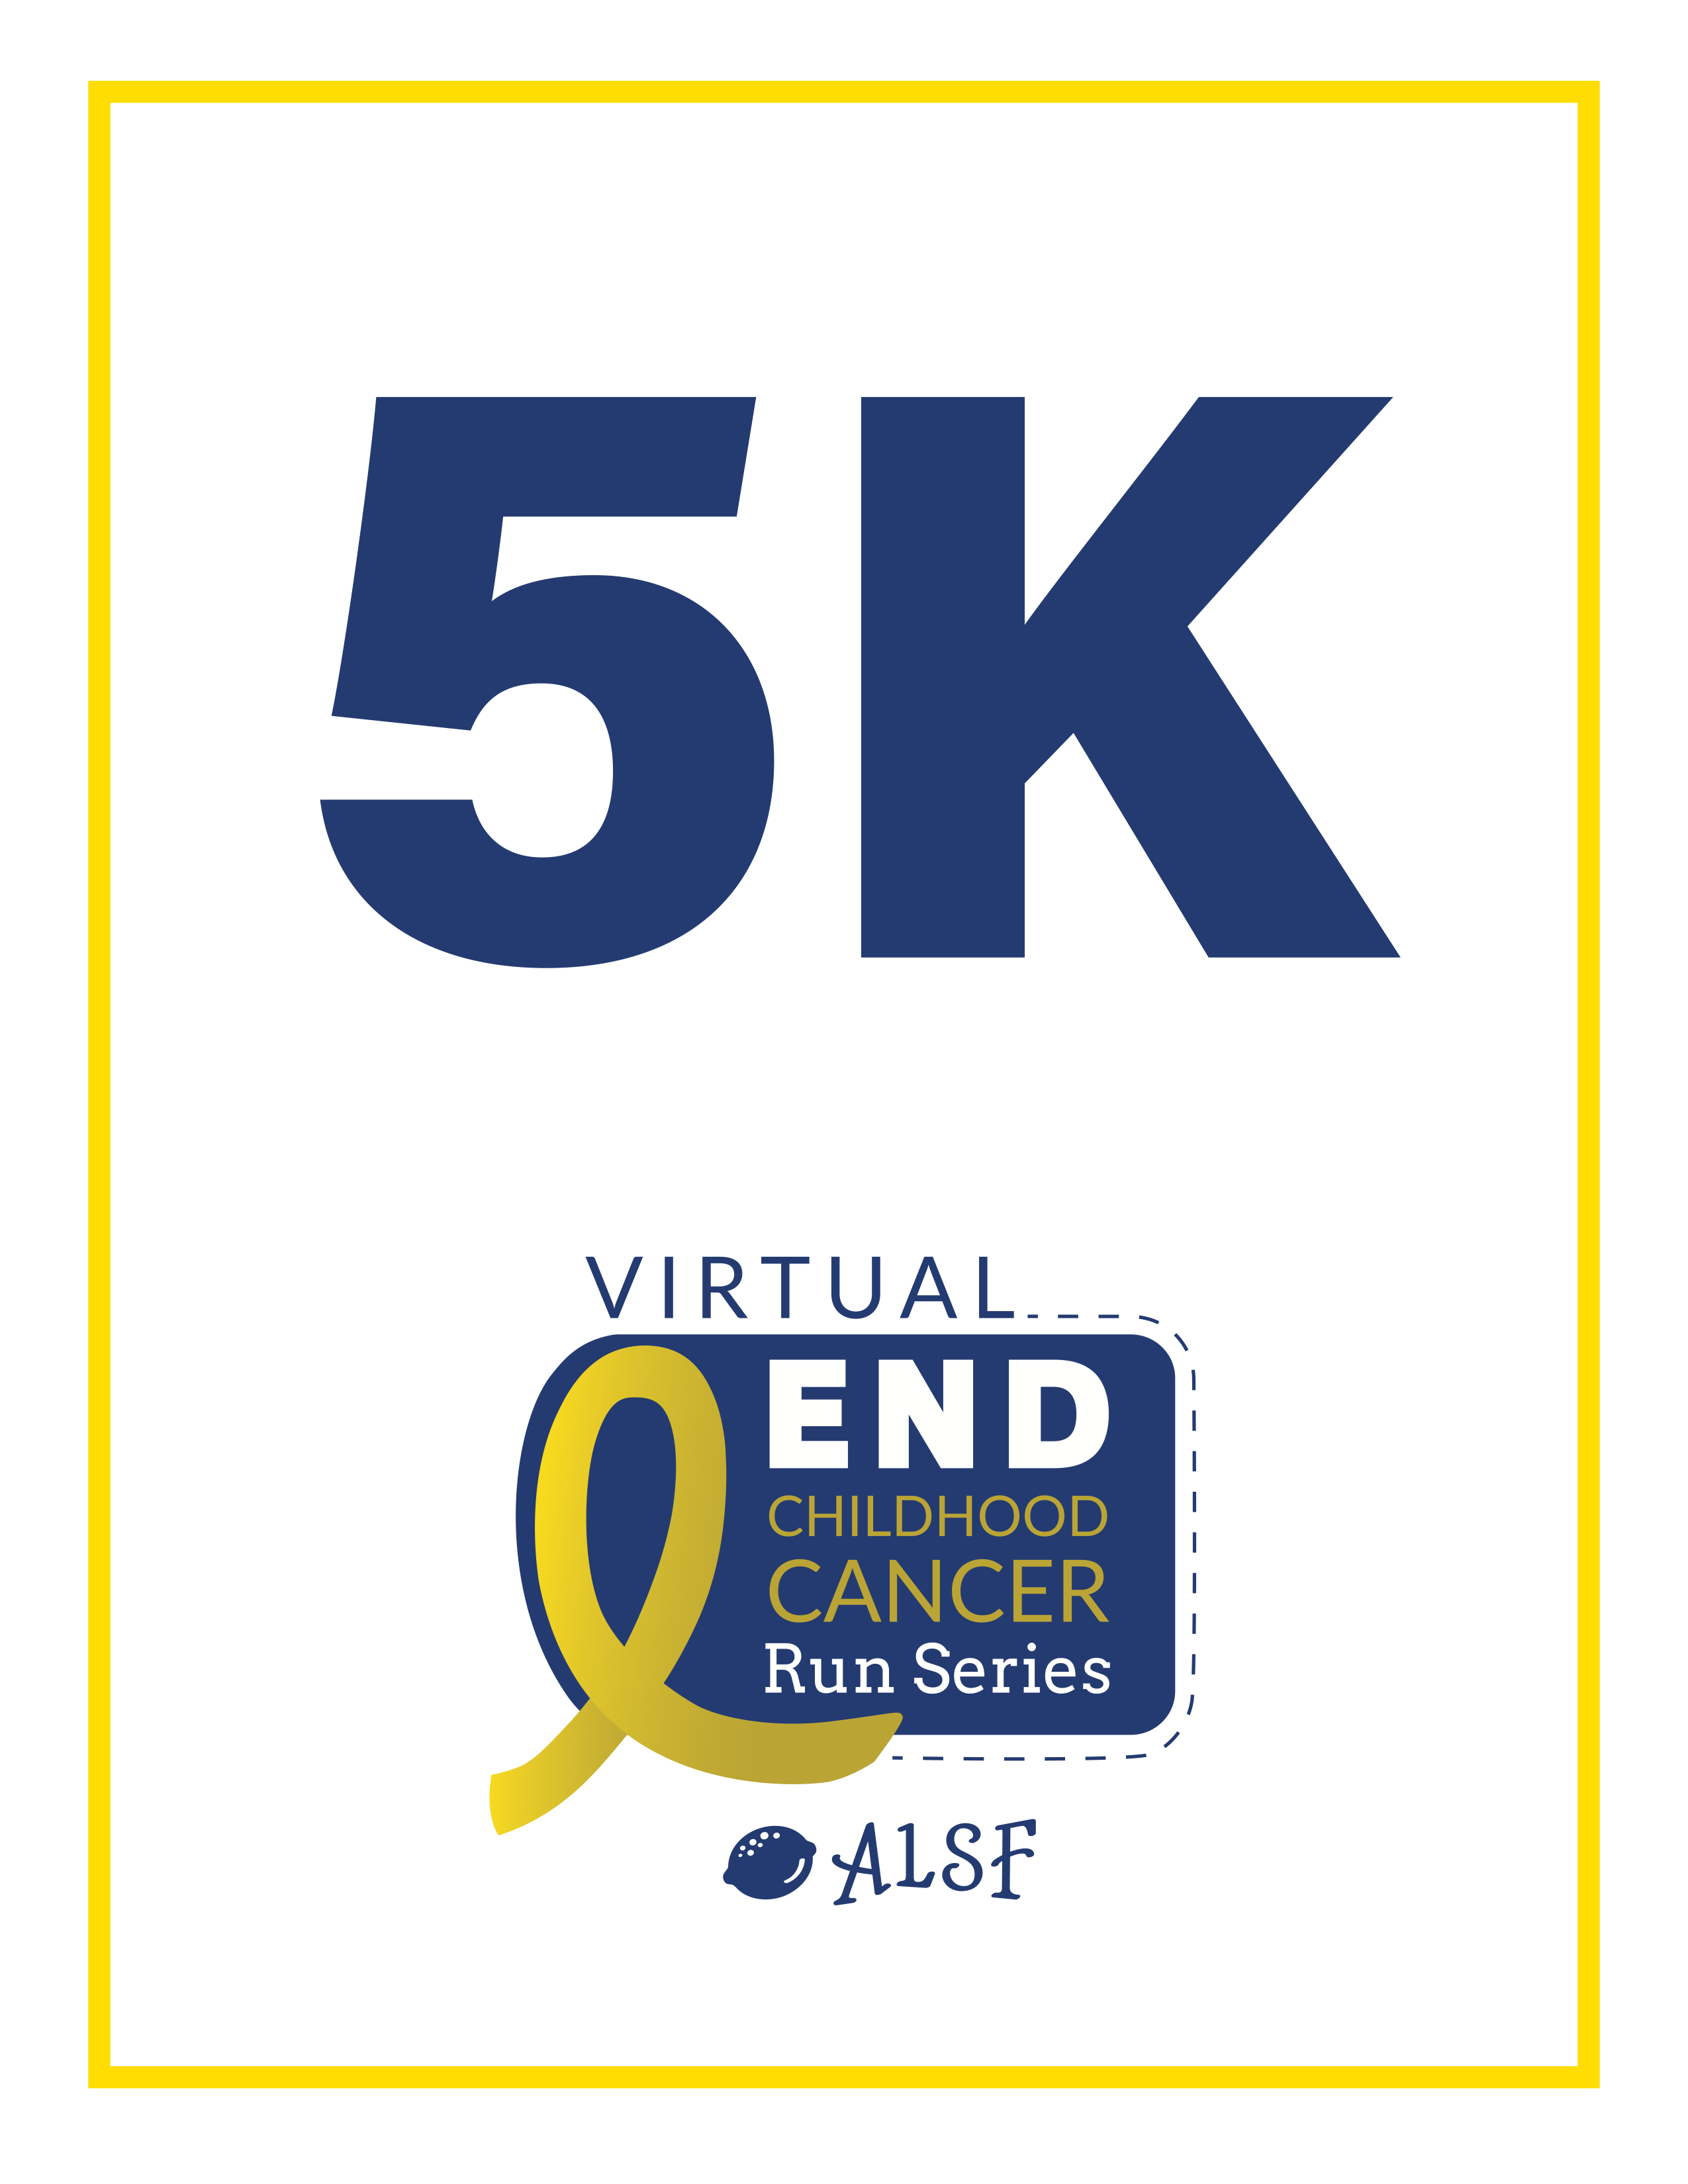 Virtual End Childhood Cancer Run Series Mile Marker - 5K